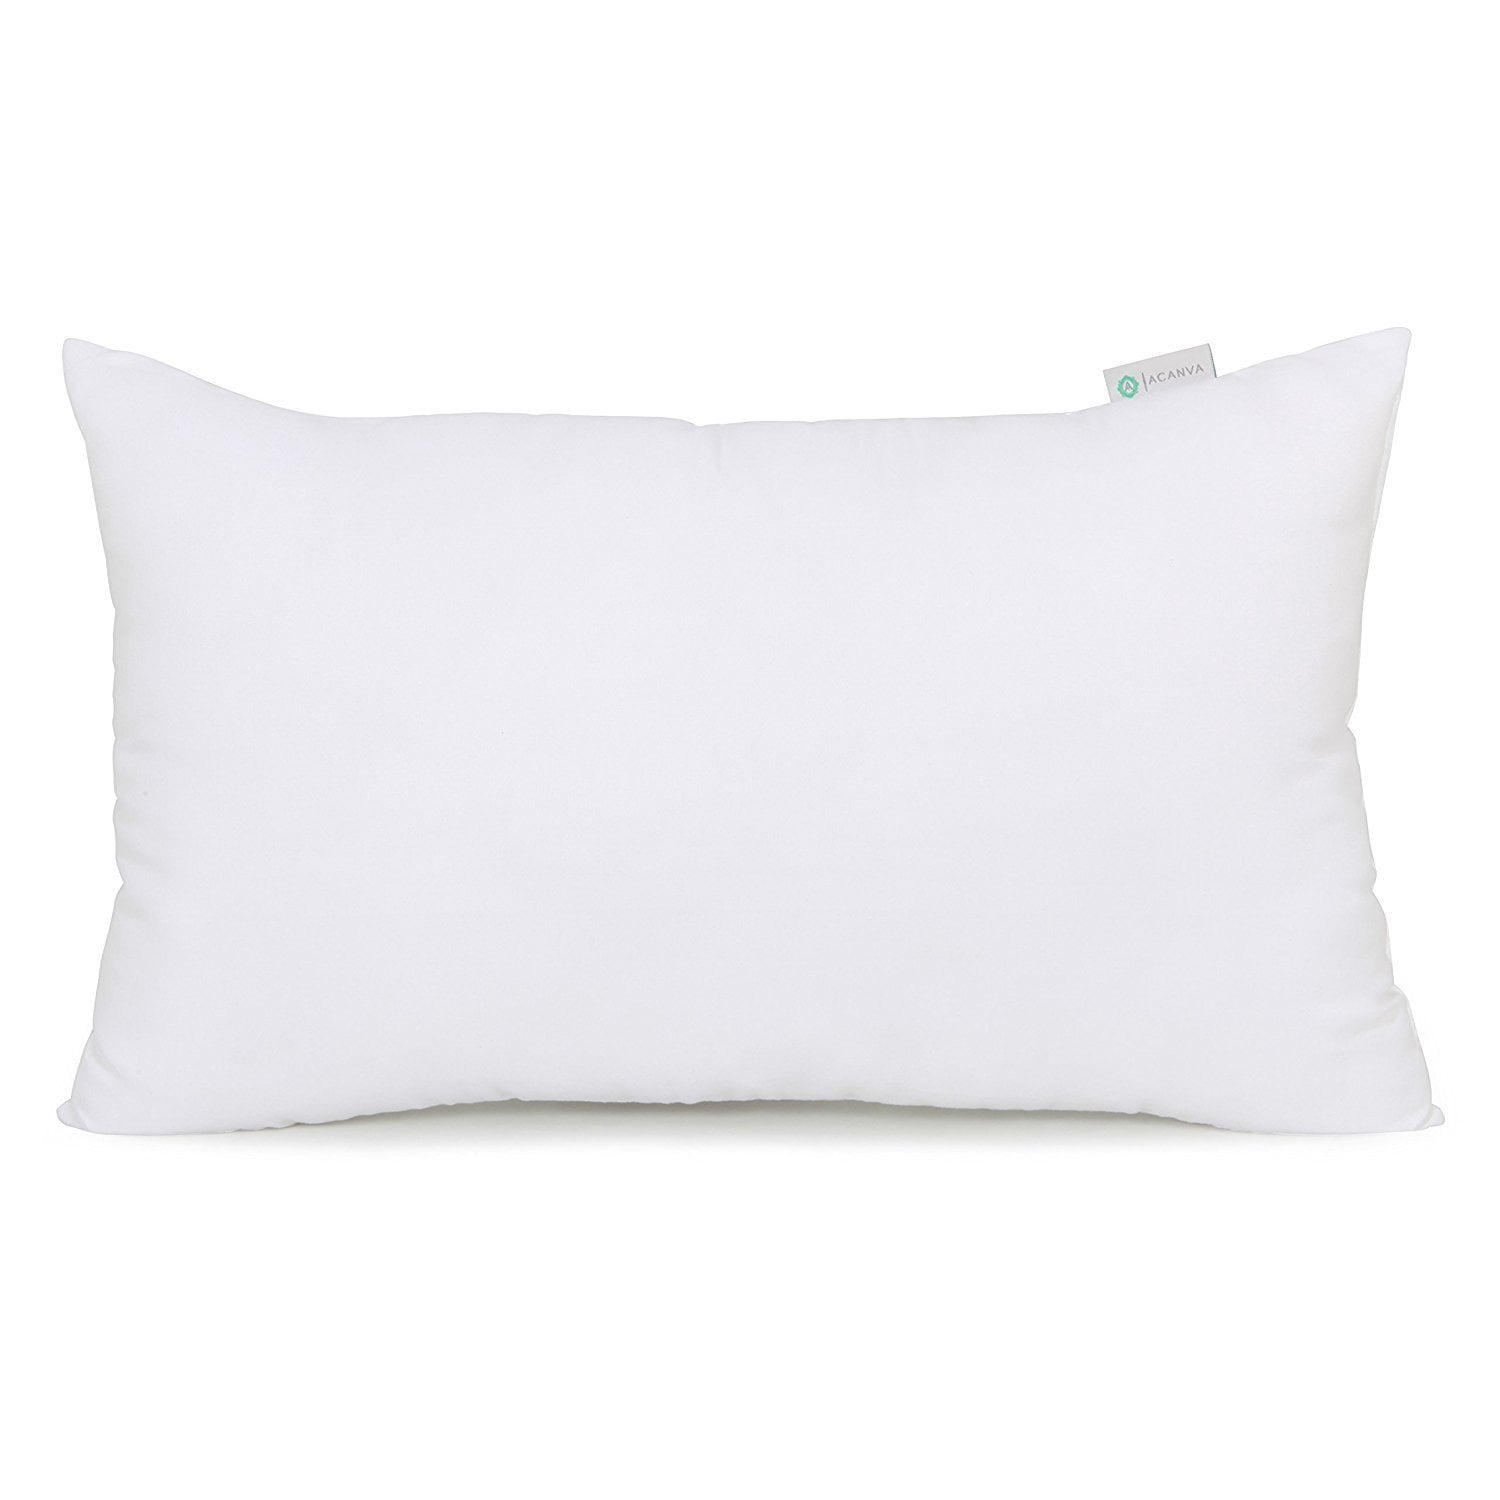 Set Of 2-20 X 20 Premium Hypoallergenic Stuffer Pillow Insert Sham Square Form P 